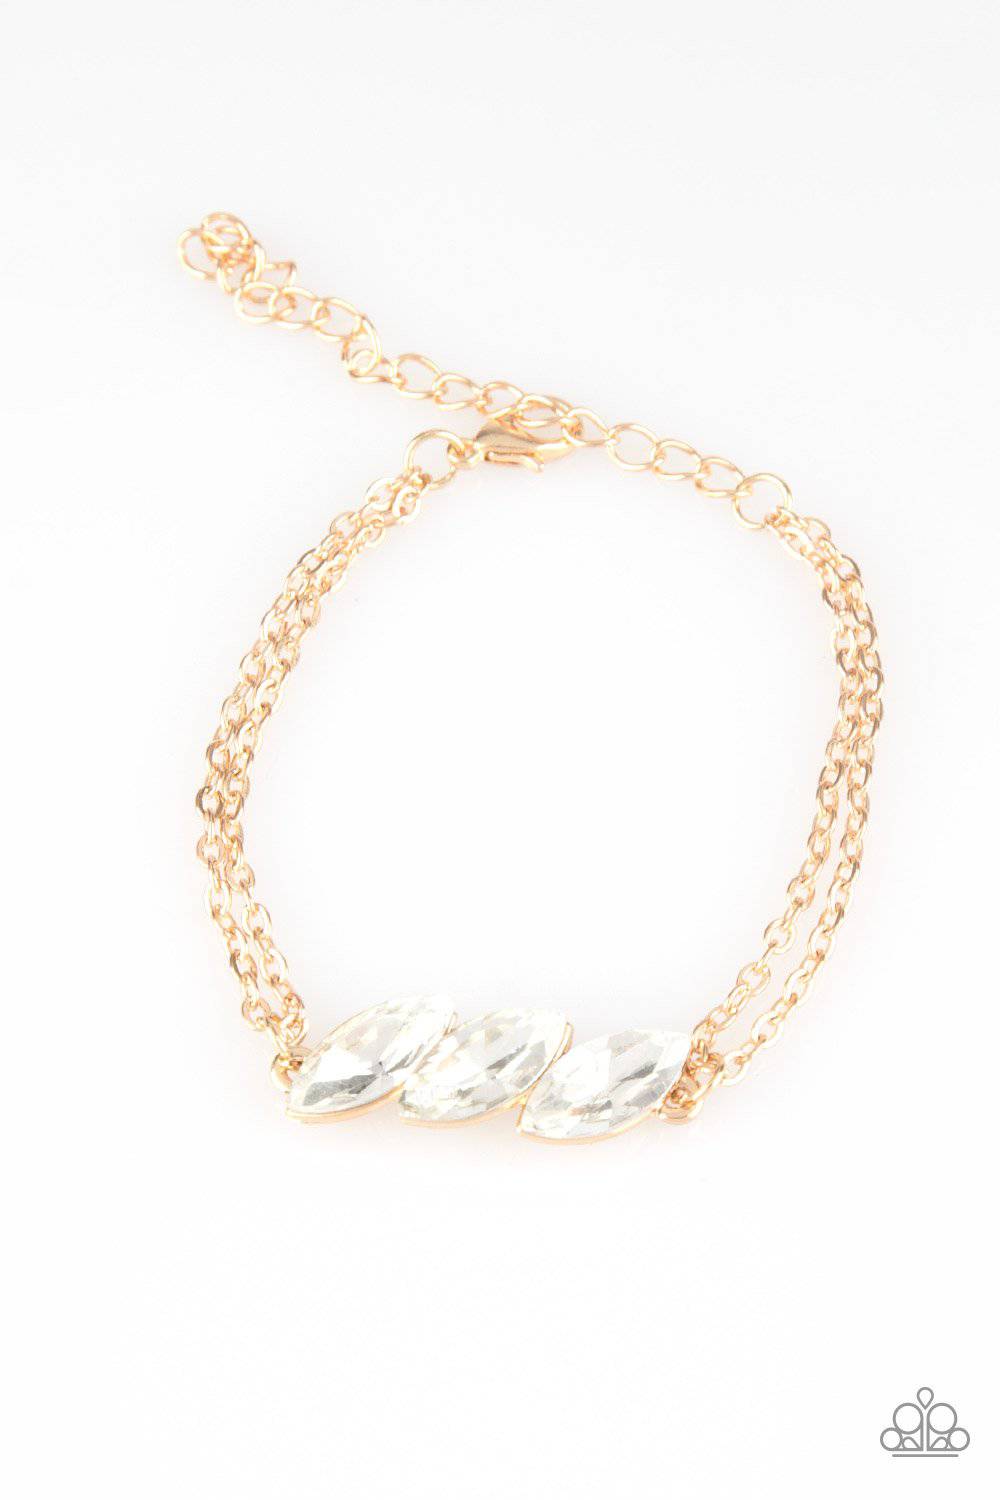 Pretty Priceless Gold Bracelet - Paparazzi Accessories - GlaMarous Titi Jewels